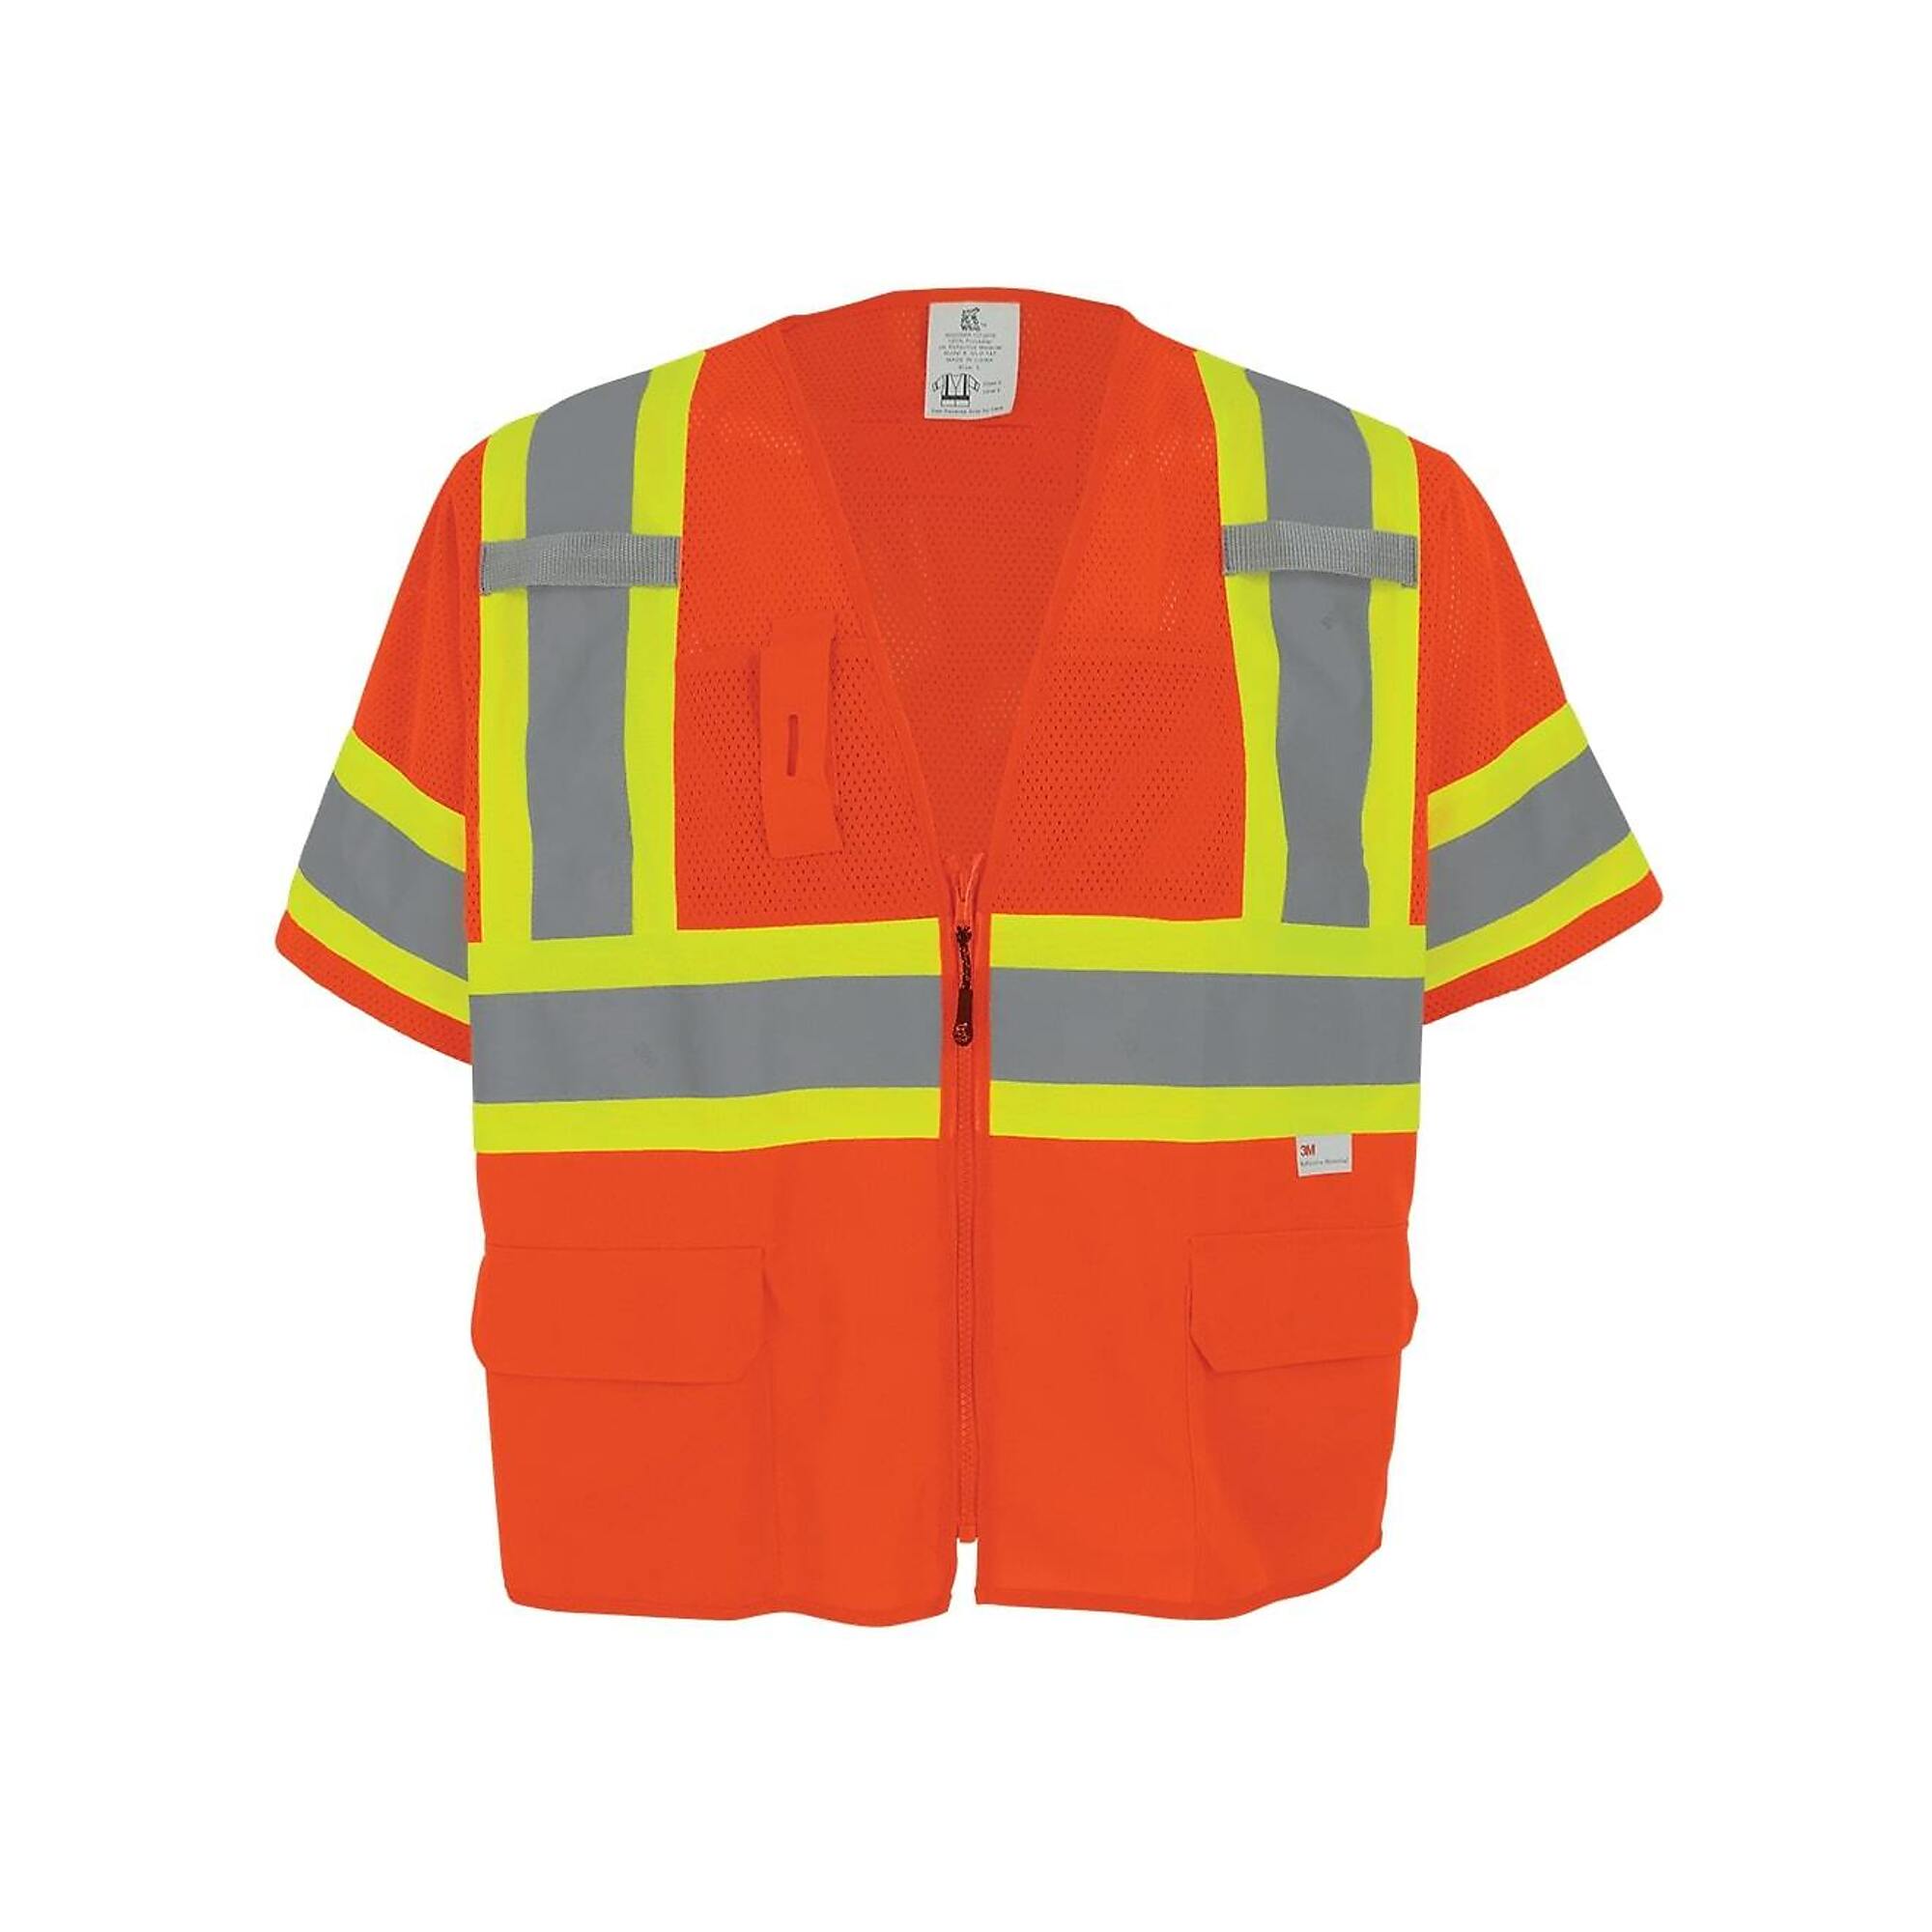 FrogWear, HV Orange, Class 3 6 Pockets, With Sleeves Solid/Mesh Vest, Size M, Color High-Visibility Orange, Model GLO-147-M